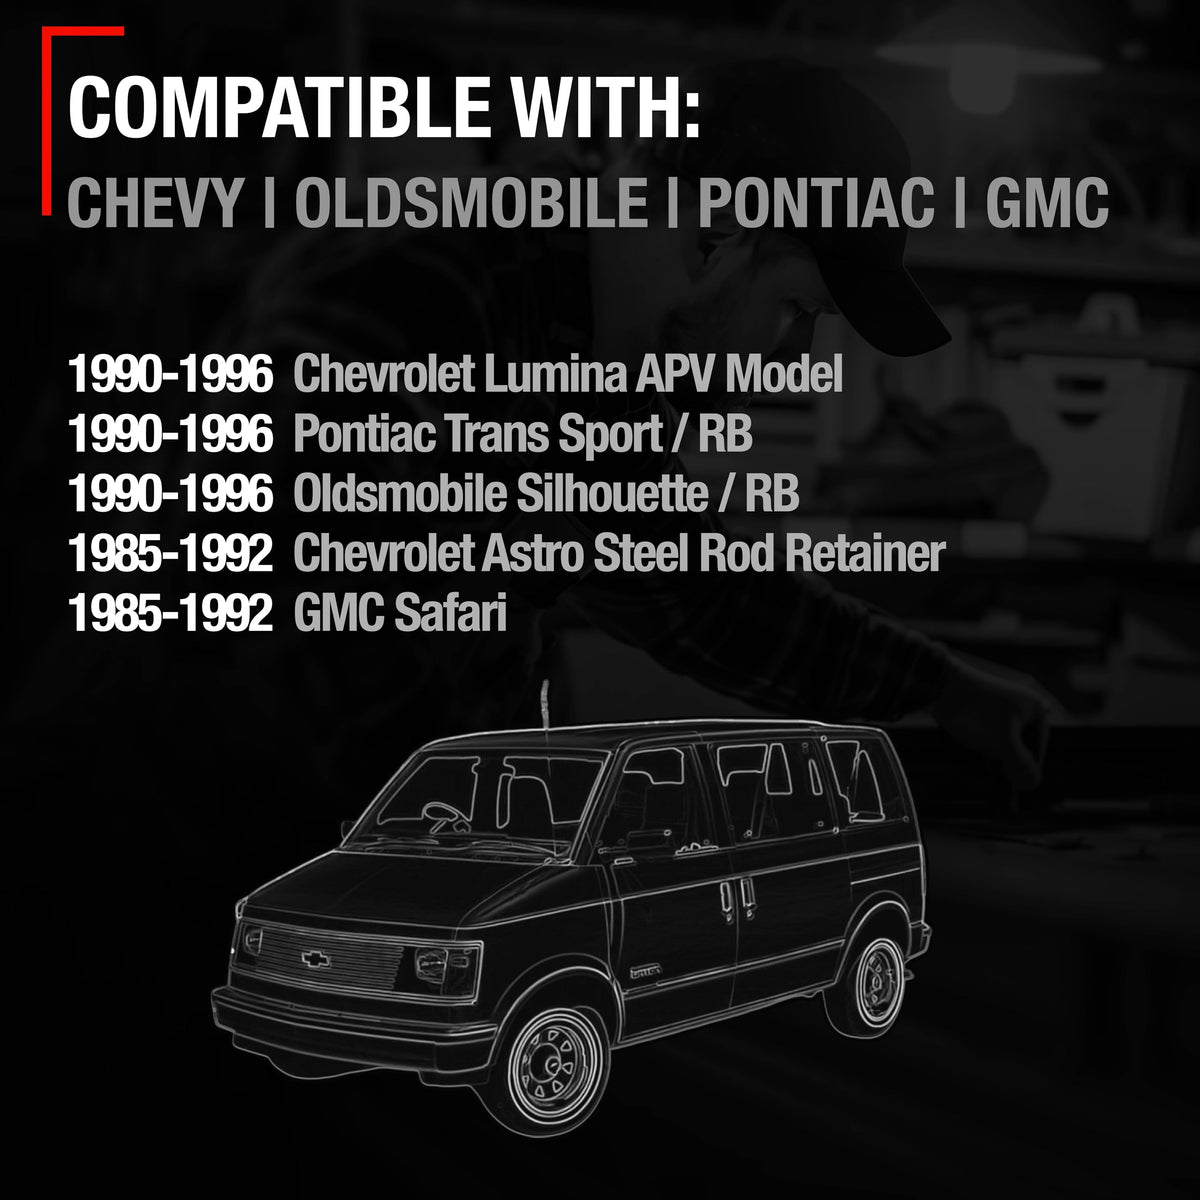 Exterior Door Handle, Front Left Driver Side - Compatible with 1985-1992 Chevrolet Astro, Lumina APV; GMC Safari; Pontiac Trans Sport RB; Oldsmobile Silhouette RB - Metal - OEM 10157549, 12545595